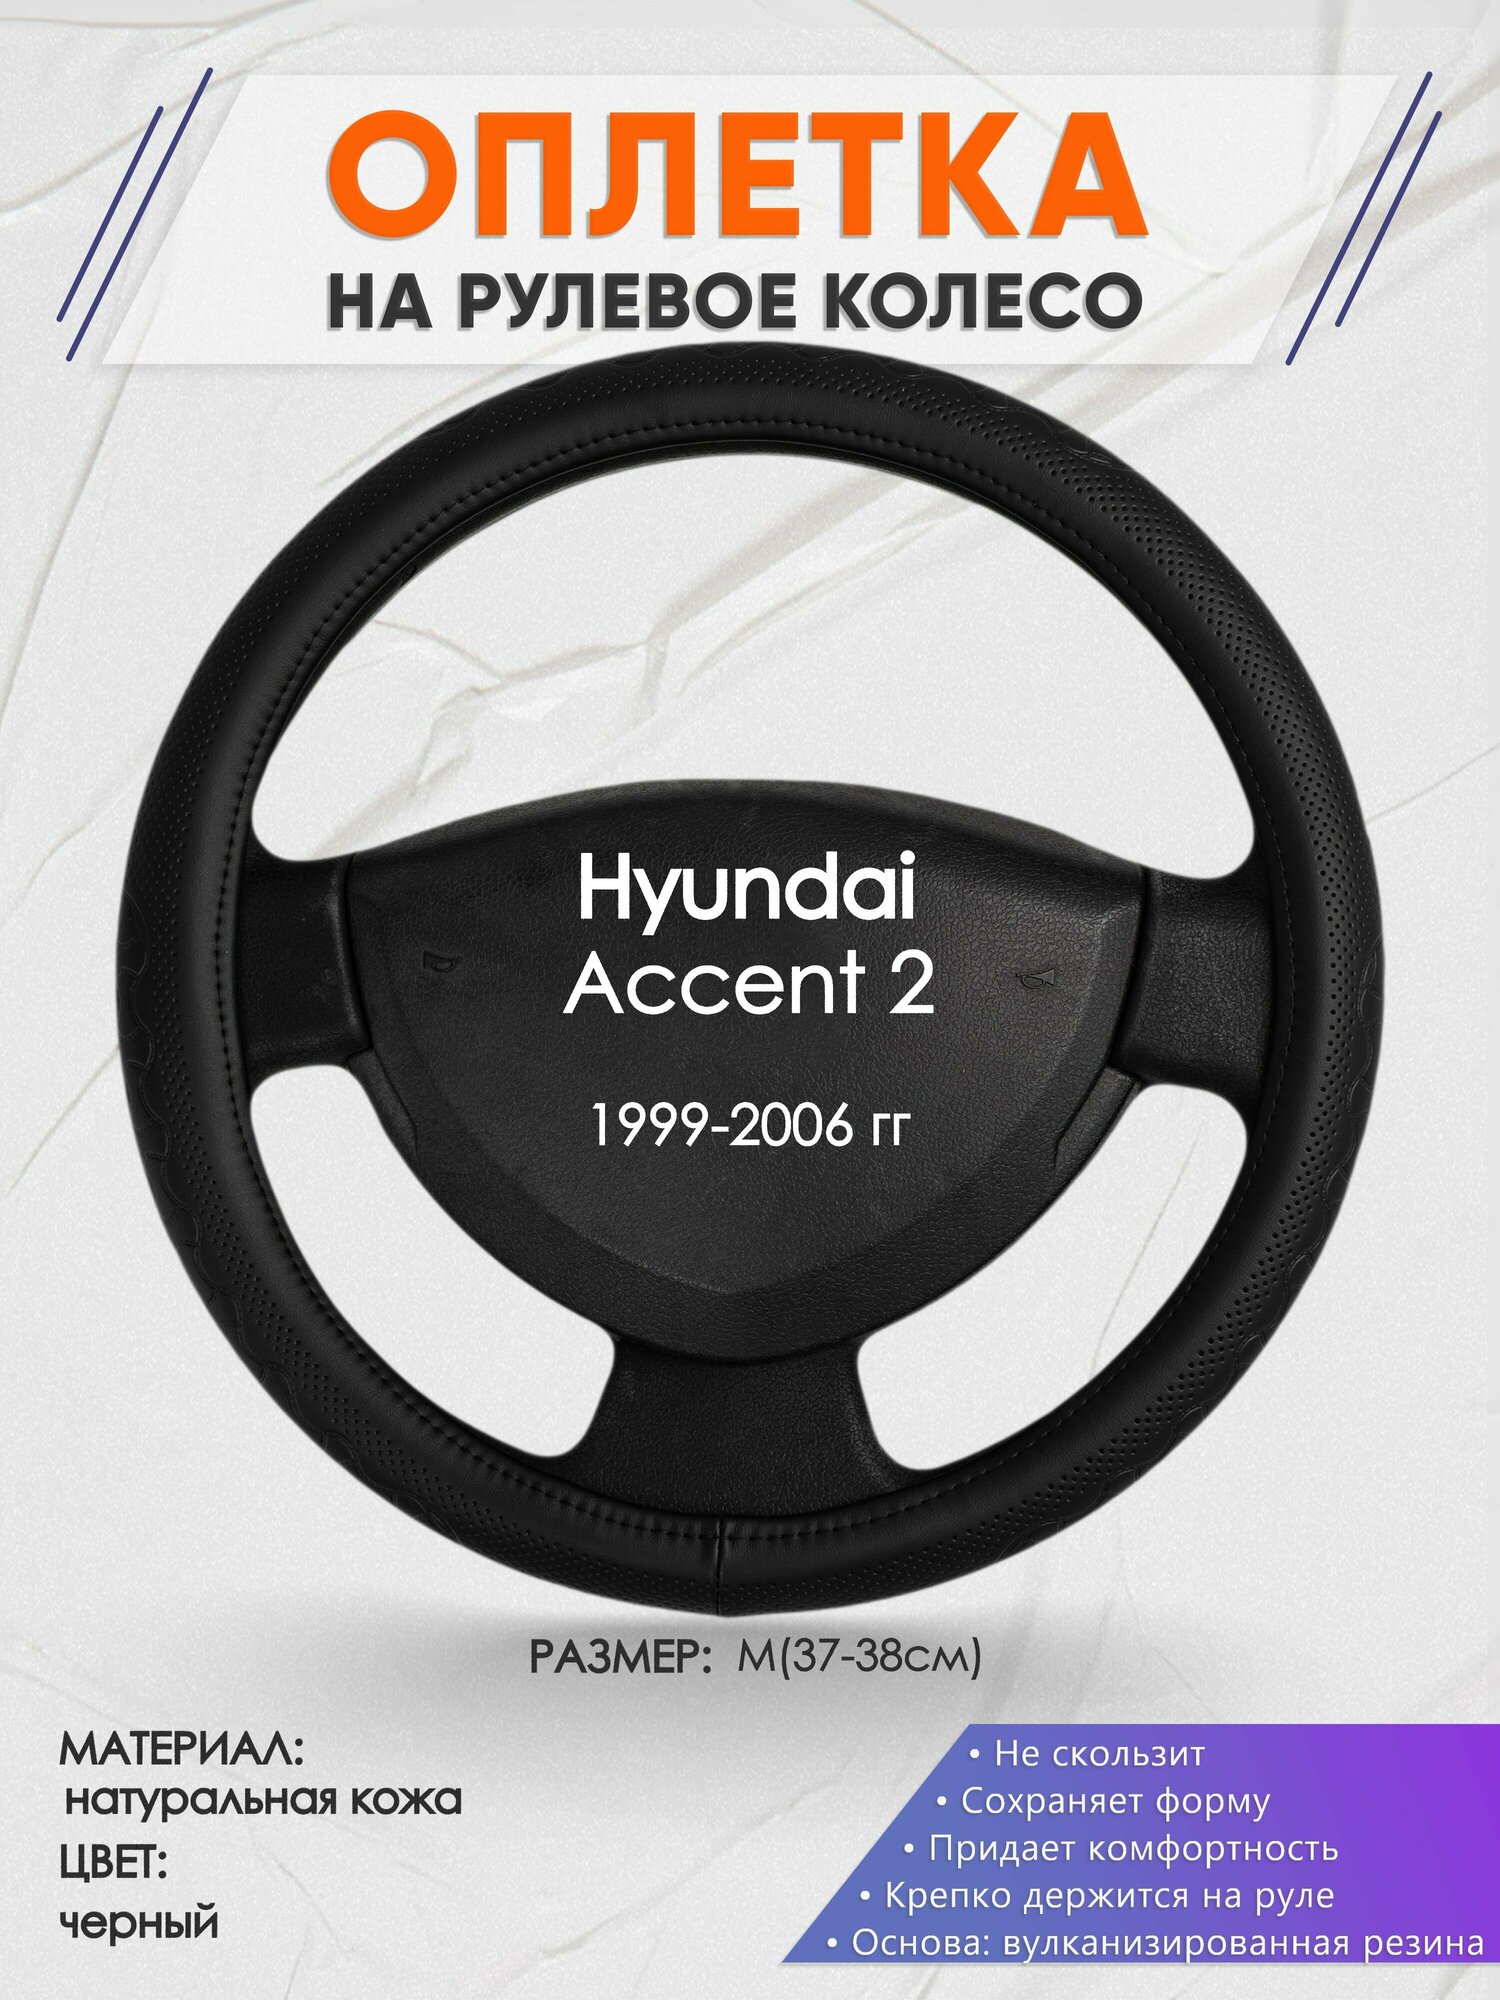 Оплетка на руль для Hyundai Accent 2(Хендай Акцент 2) 1999-2006, M(37-38см), Натуральная кожа 25